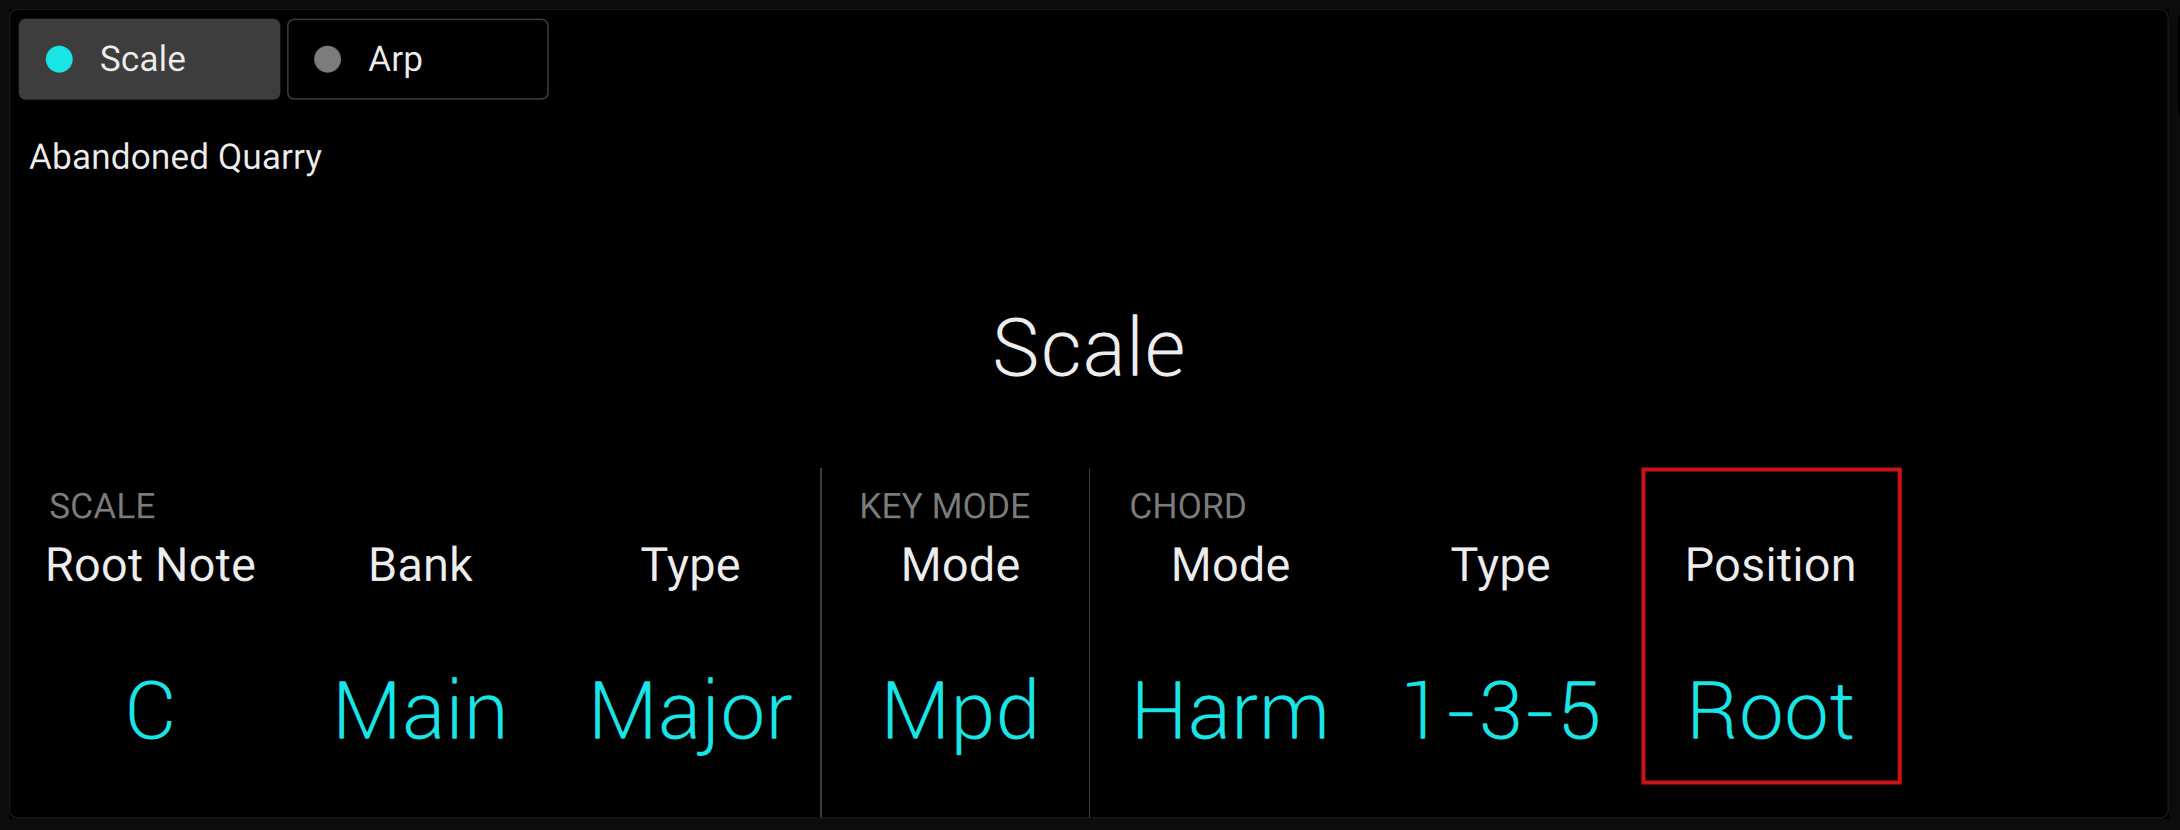 KS-MK3_D_PlayAssist-Scale-CHORD-Position.jpg